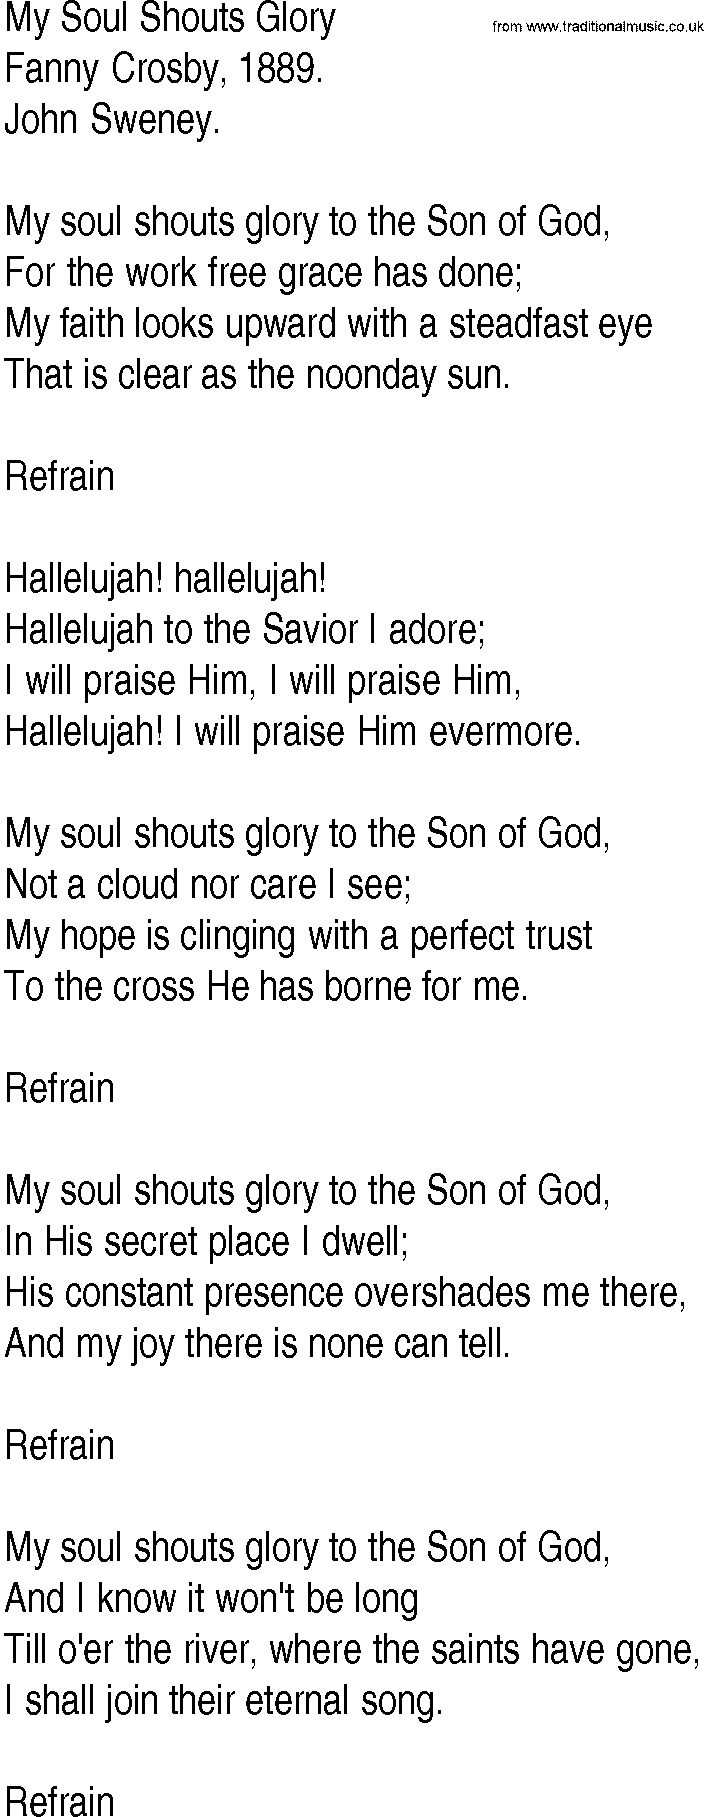 Hymn and Gospel Song: My Soul Shouts Glory by Fanny Crosby lyrics